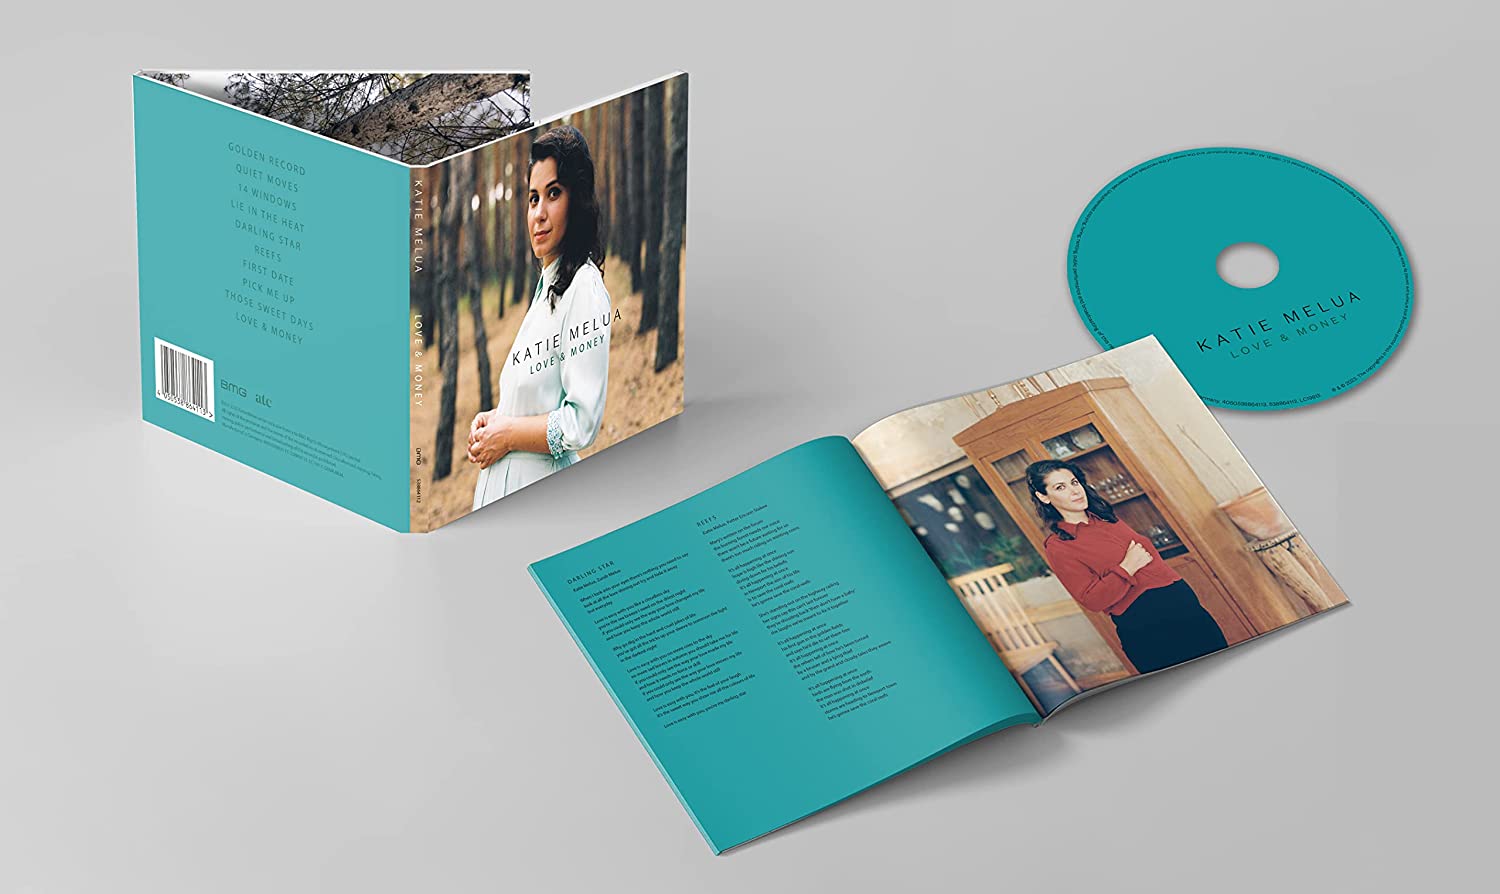 Katie Melua - Love & Money - Opera / Vocal - CD - image 2 of 2